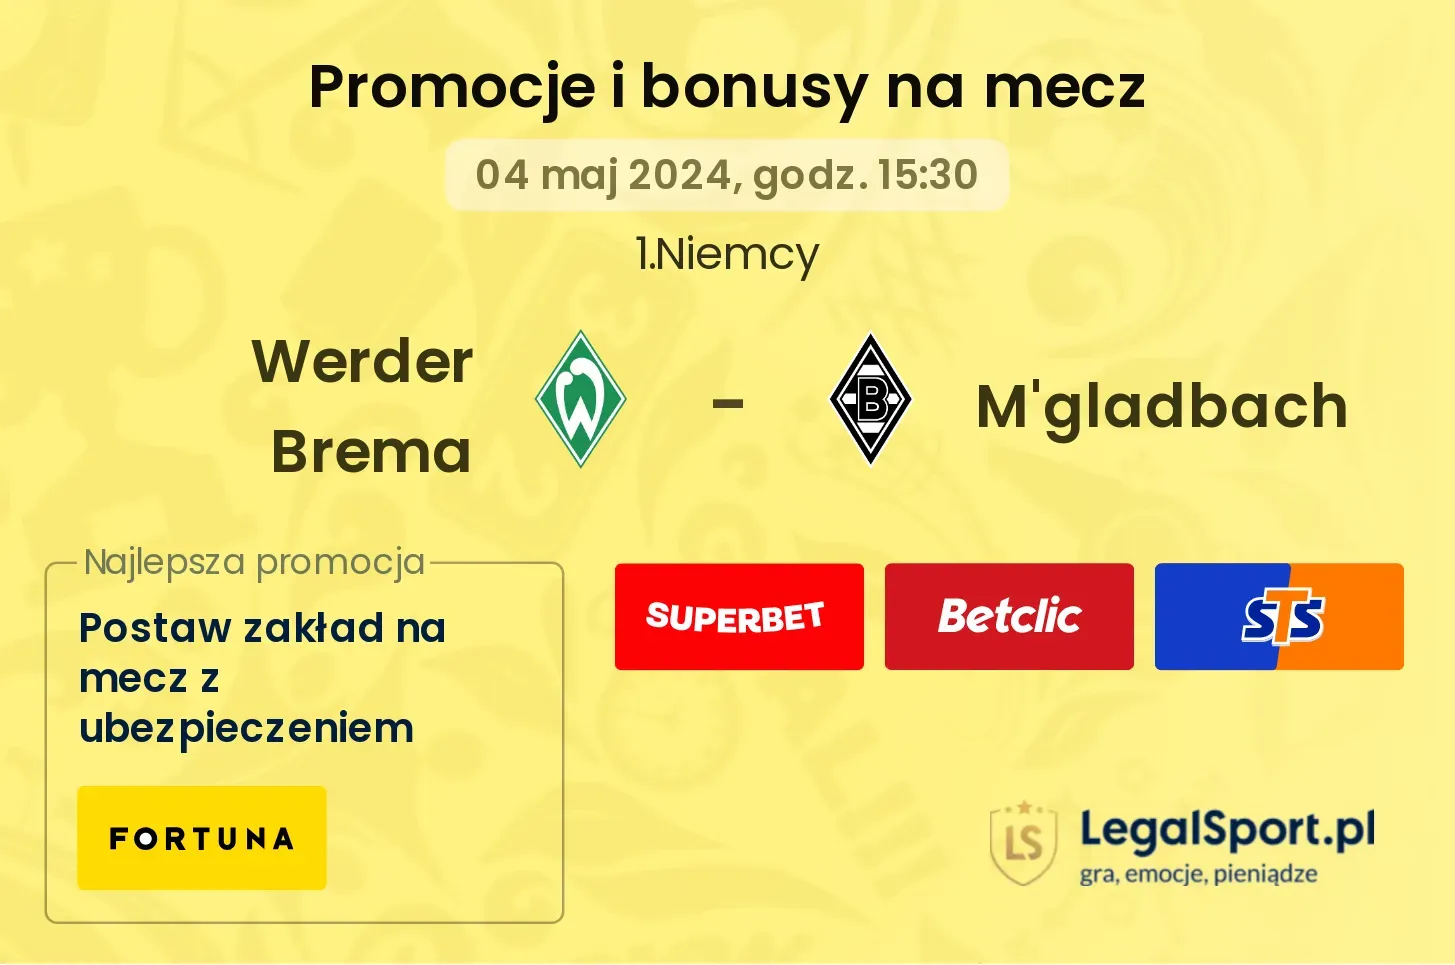 Werder Brema - M'gladbach promocje bonusy na mecz